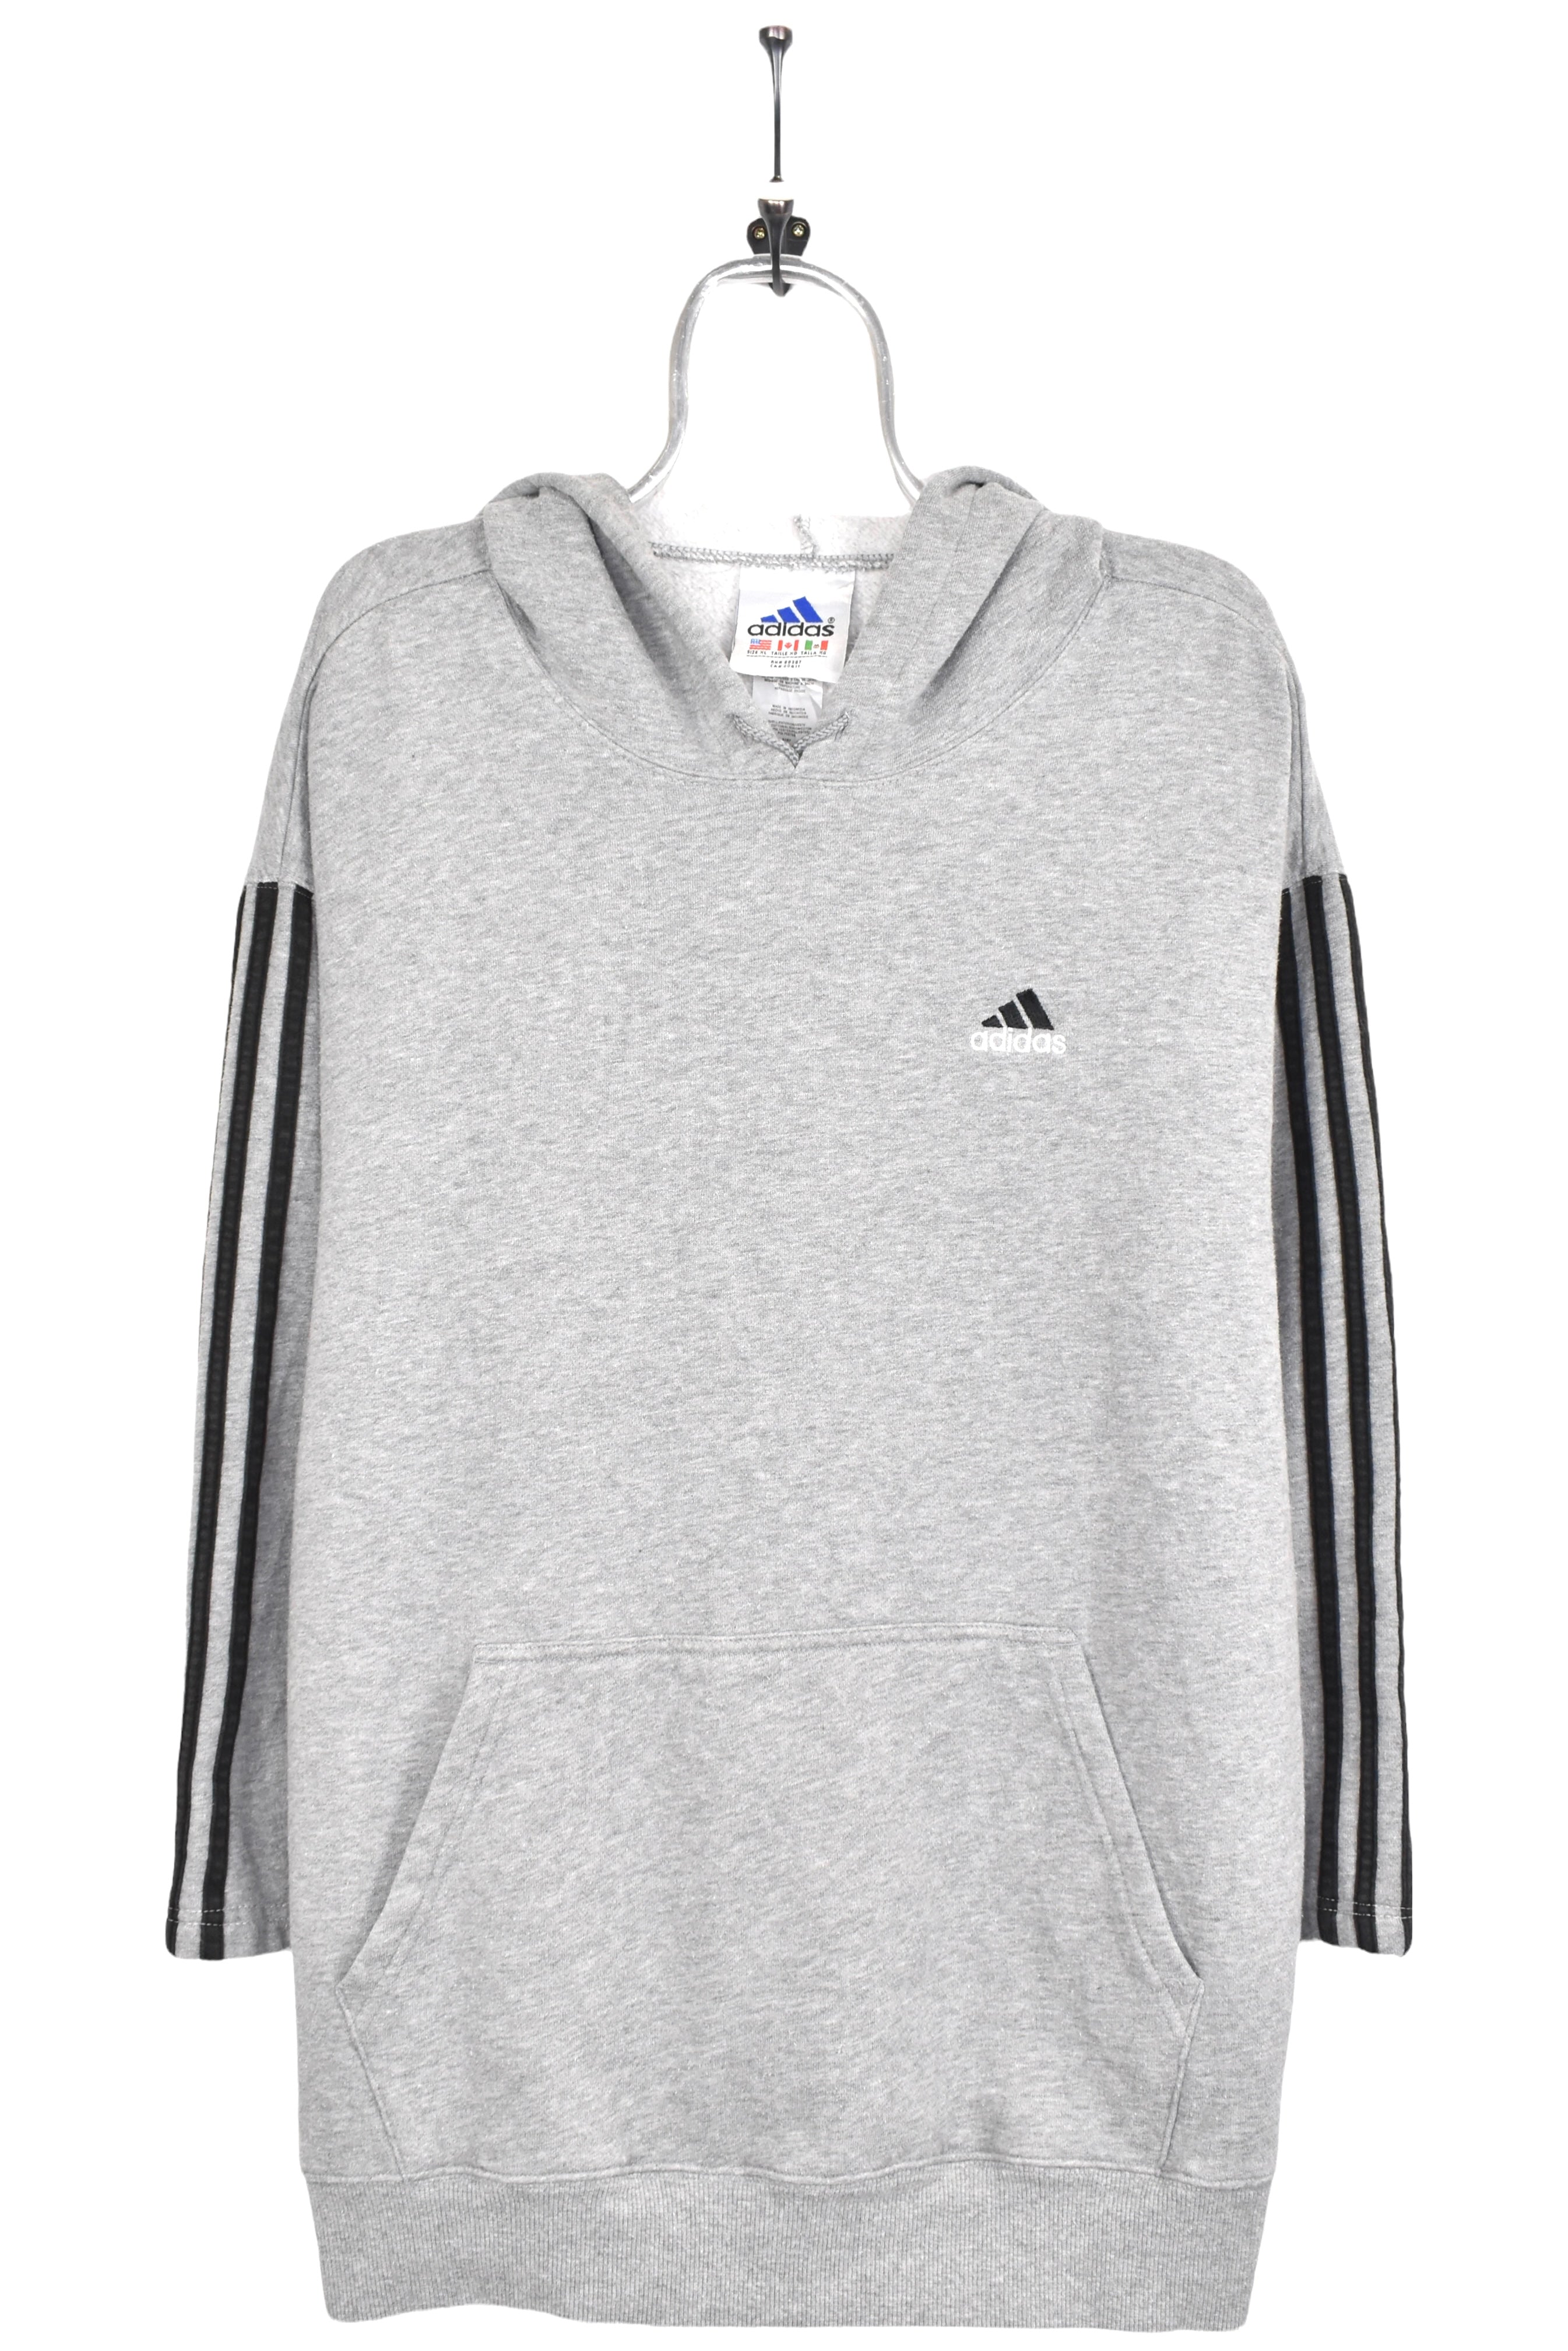 Vintage Adidas hoodie, grey embroidered sweatshirt - AU XL ADIDAS